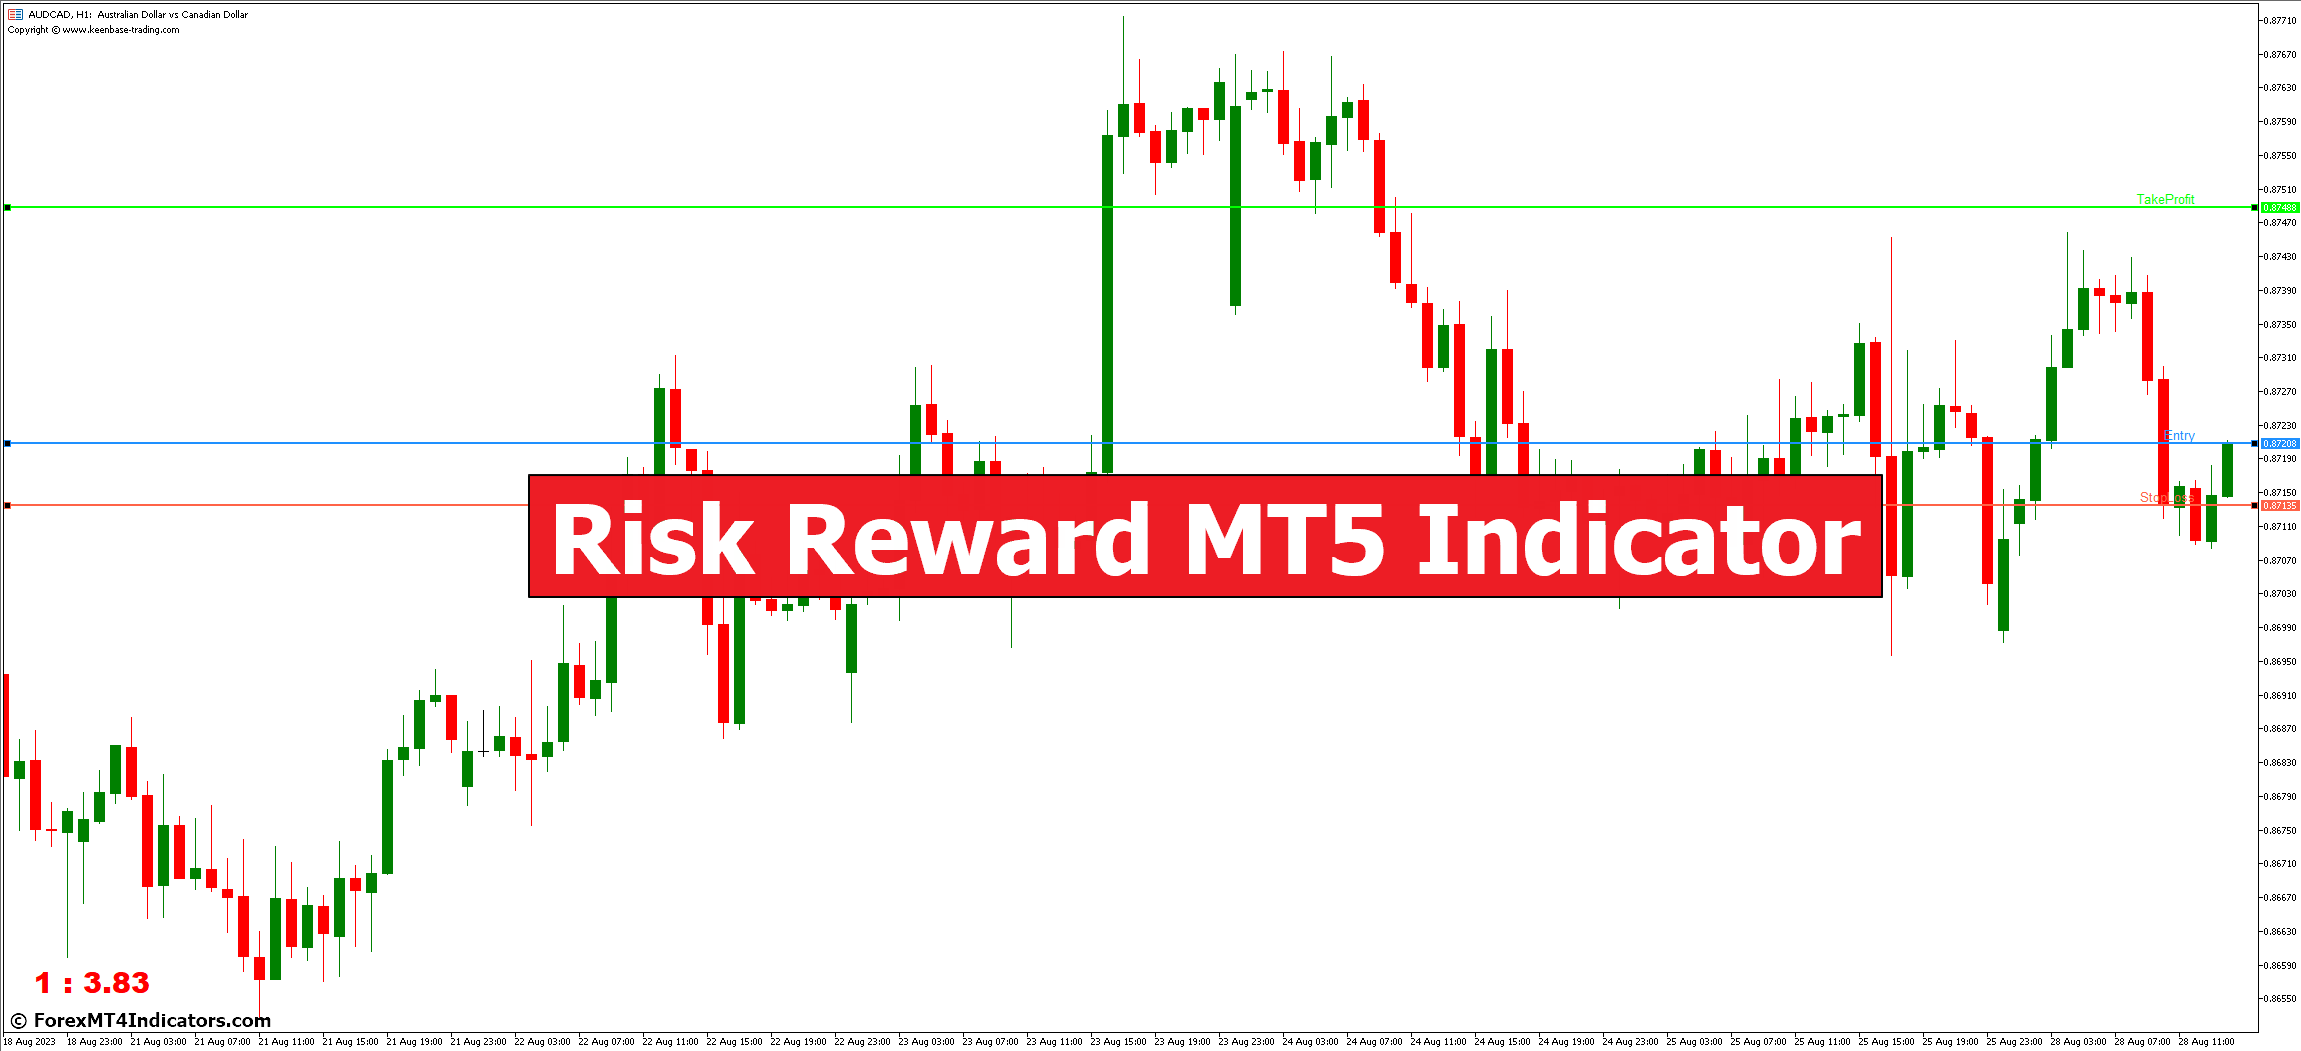 Risk Reward MT5 Indicator